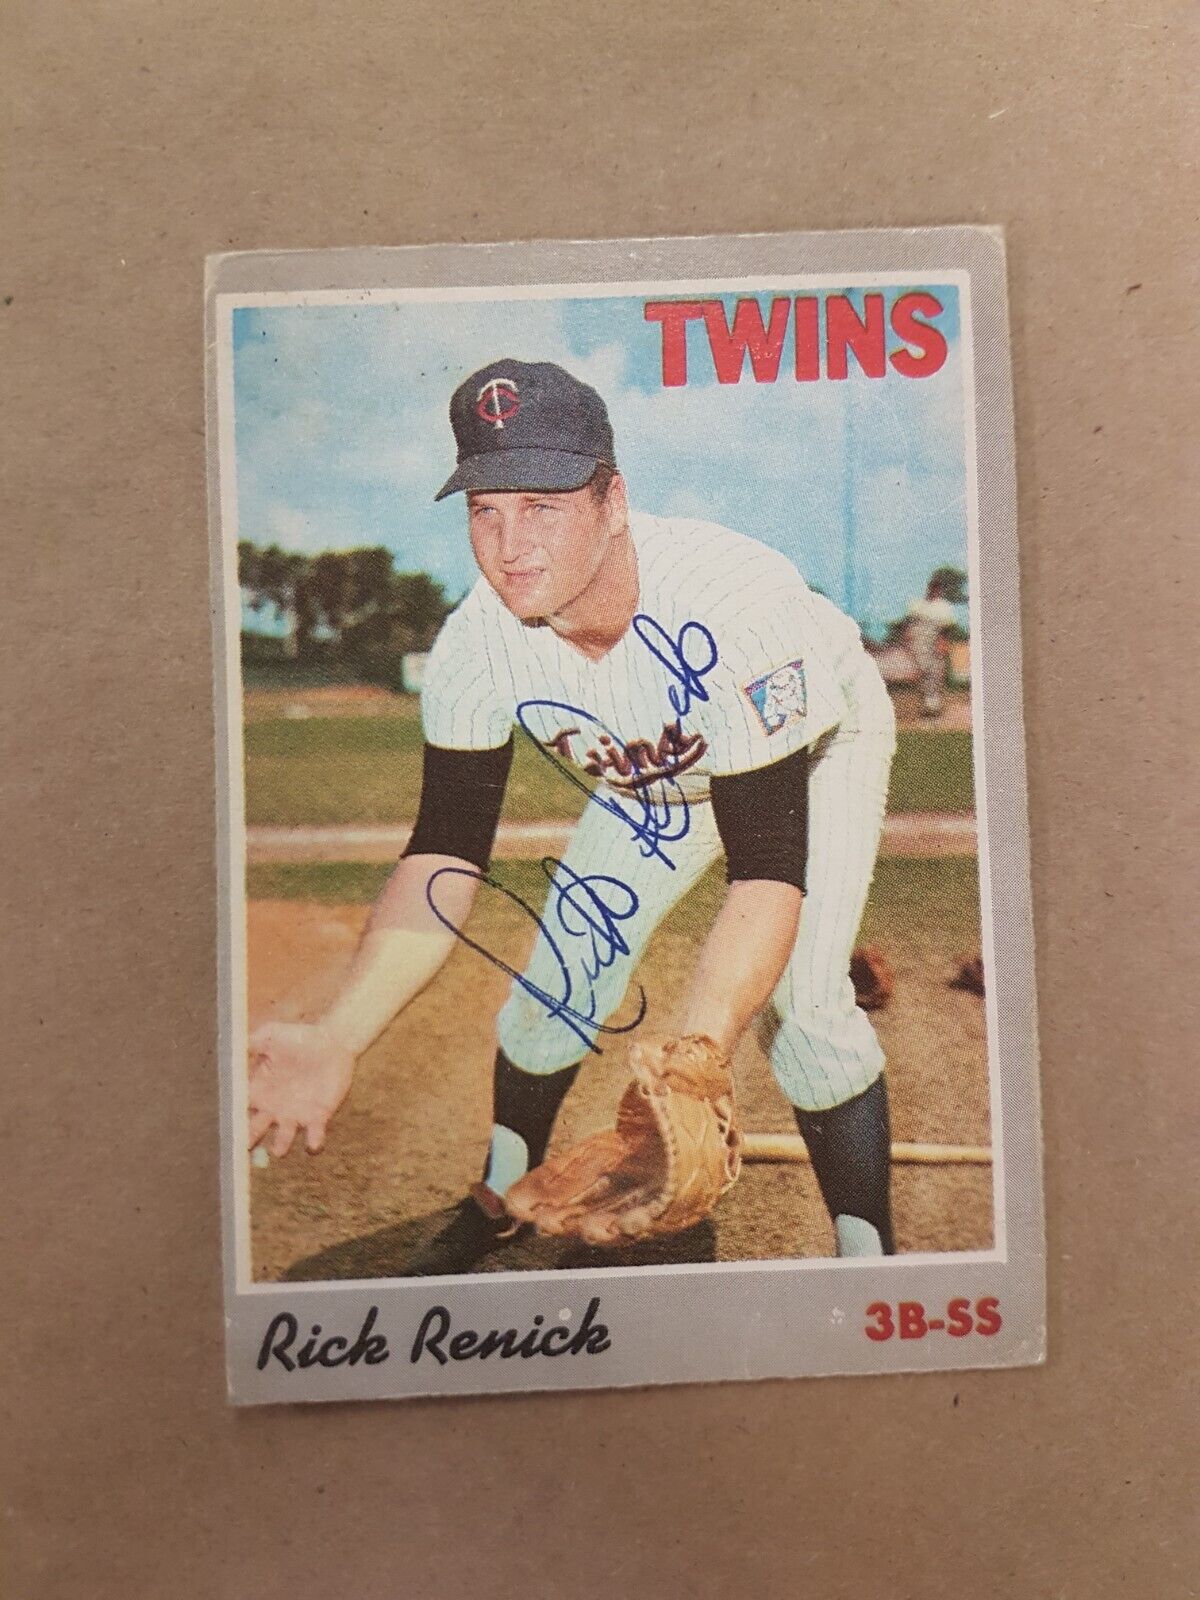 Rick Renick Twins Autograph Photo SPORTS signed Baseball card MLB TCG 1970